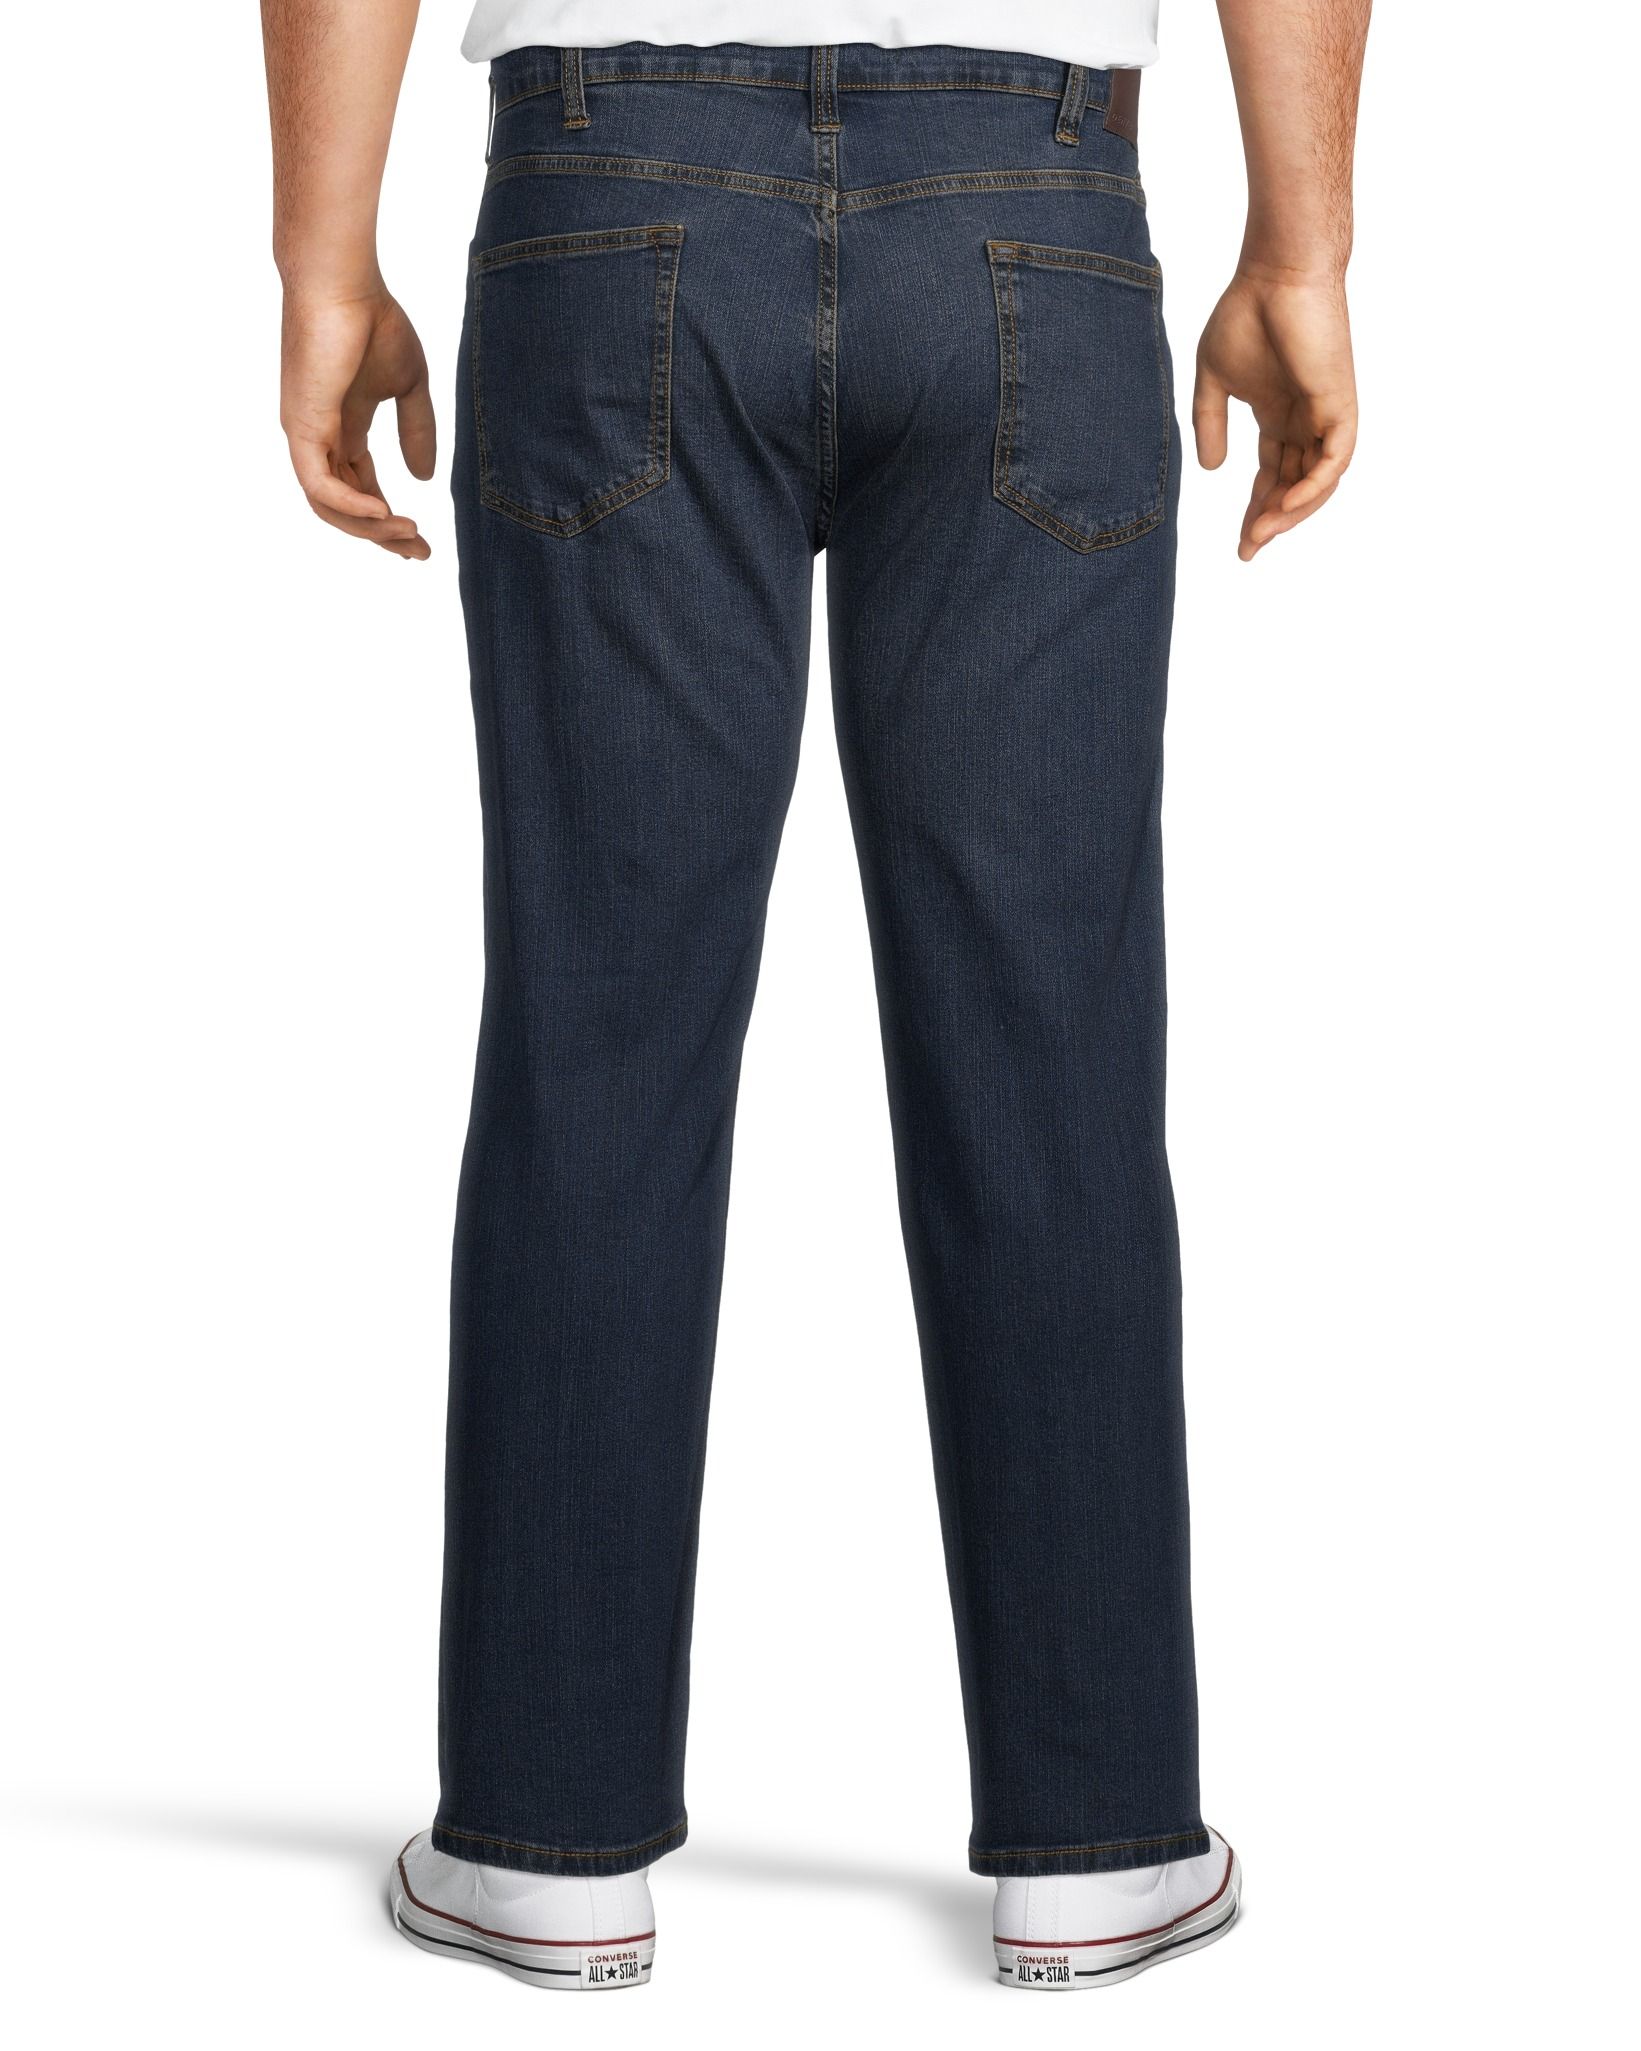 Denver Hayes Men's Value Stretch Straight Fit Jeans - Dark Wash 